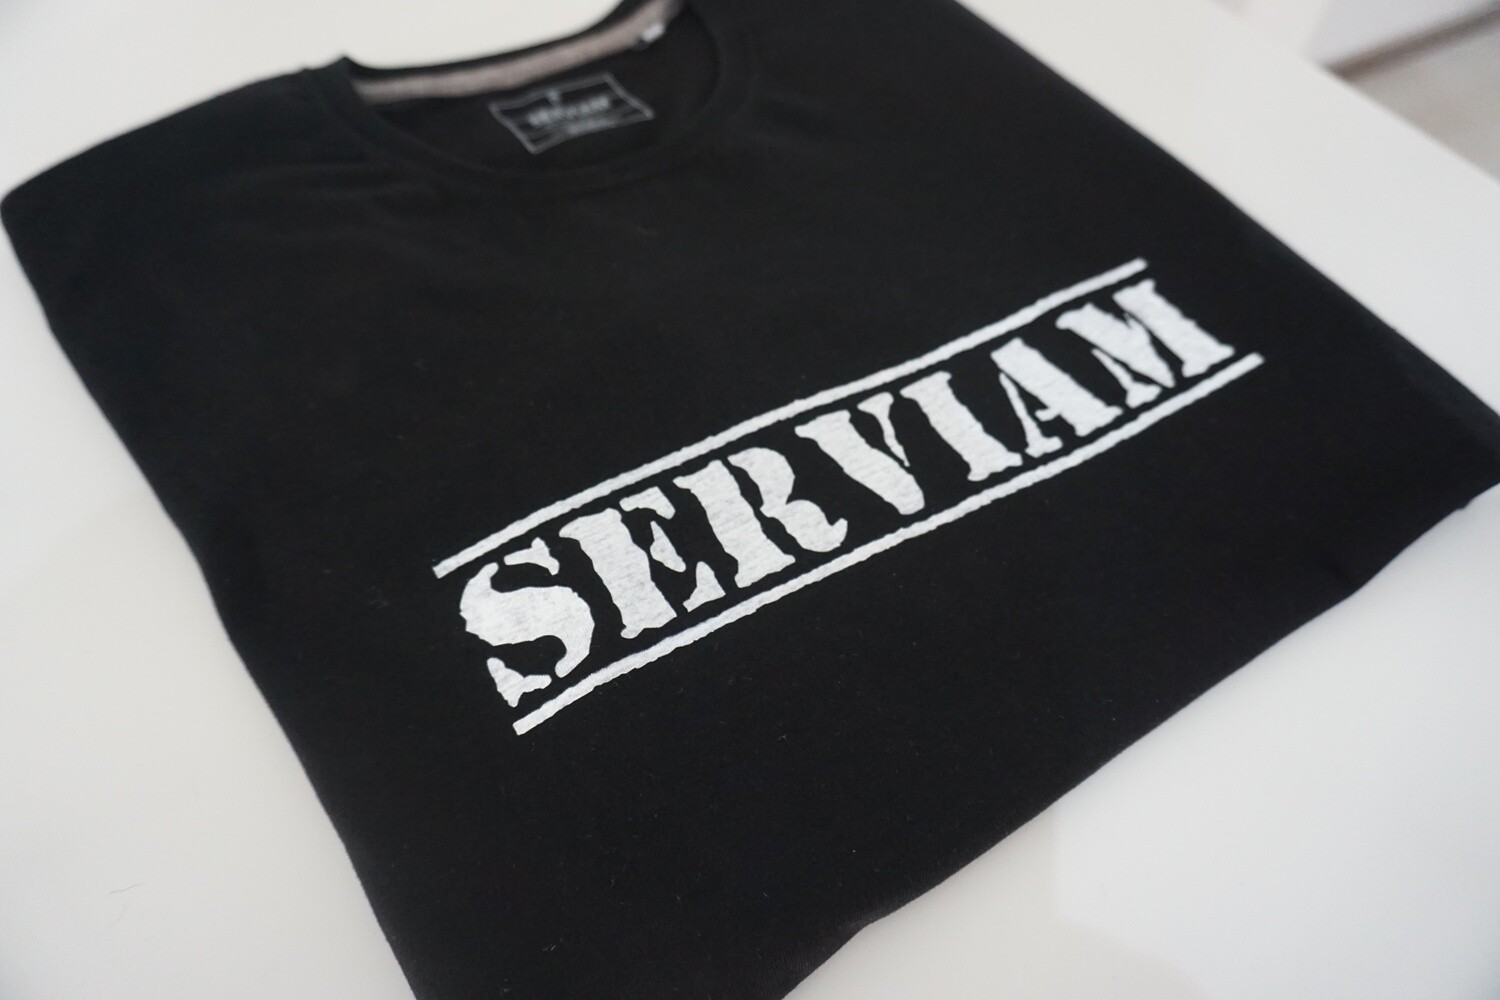 Serviam Classic T-shirt (Medium)